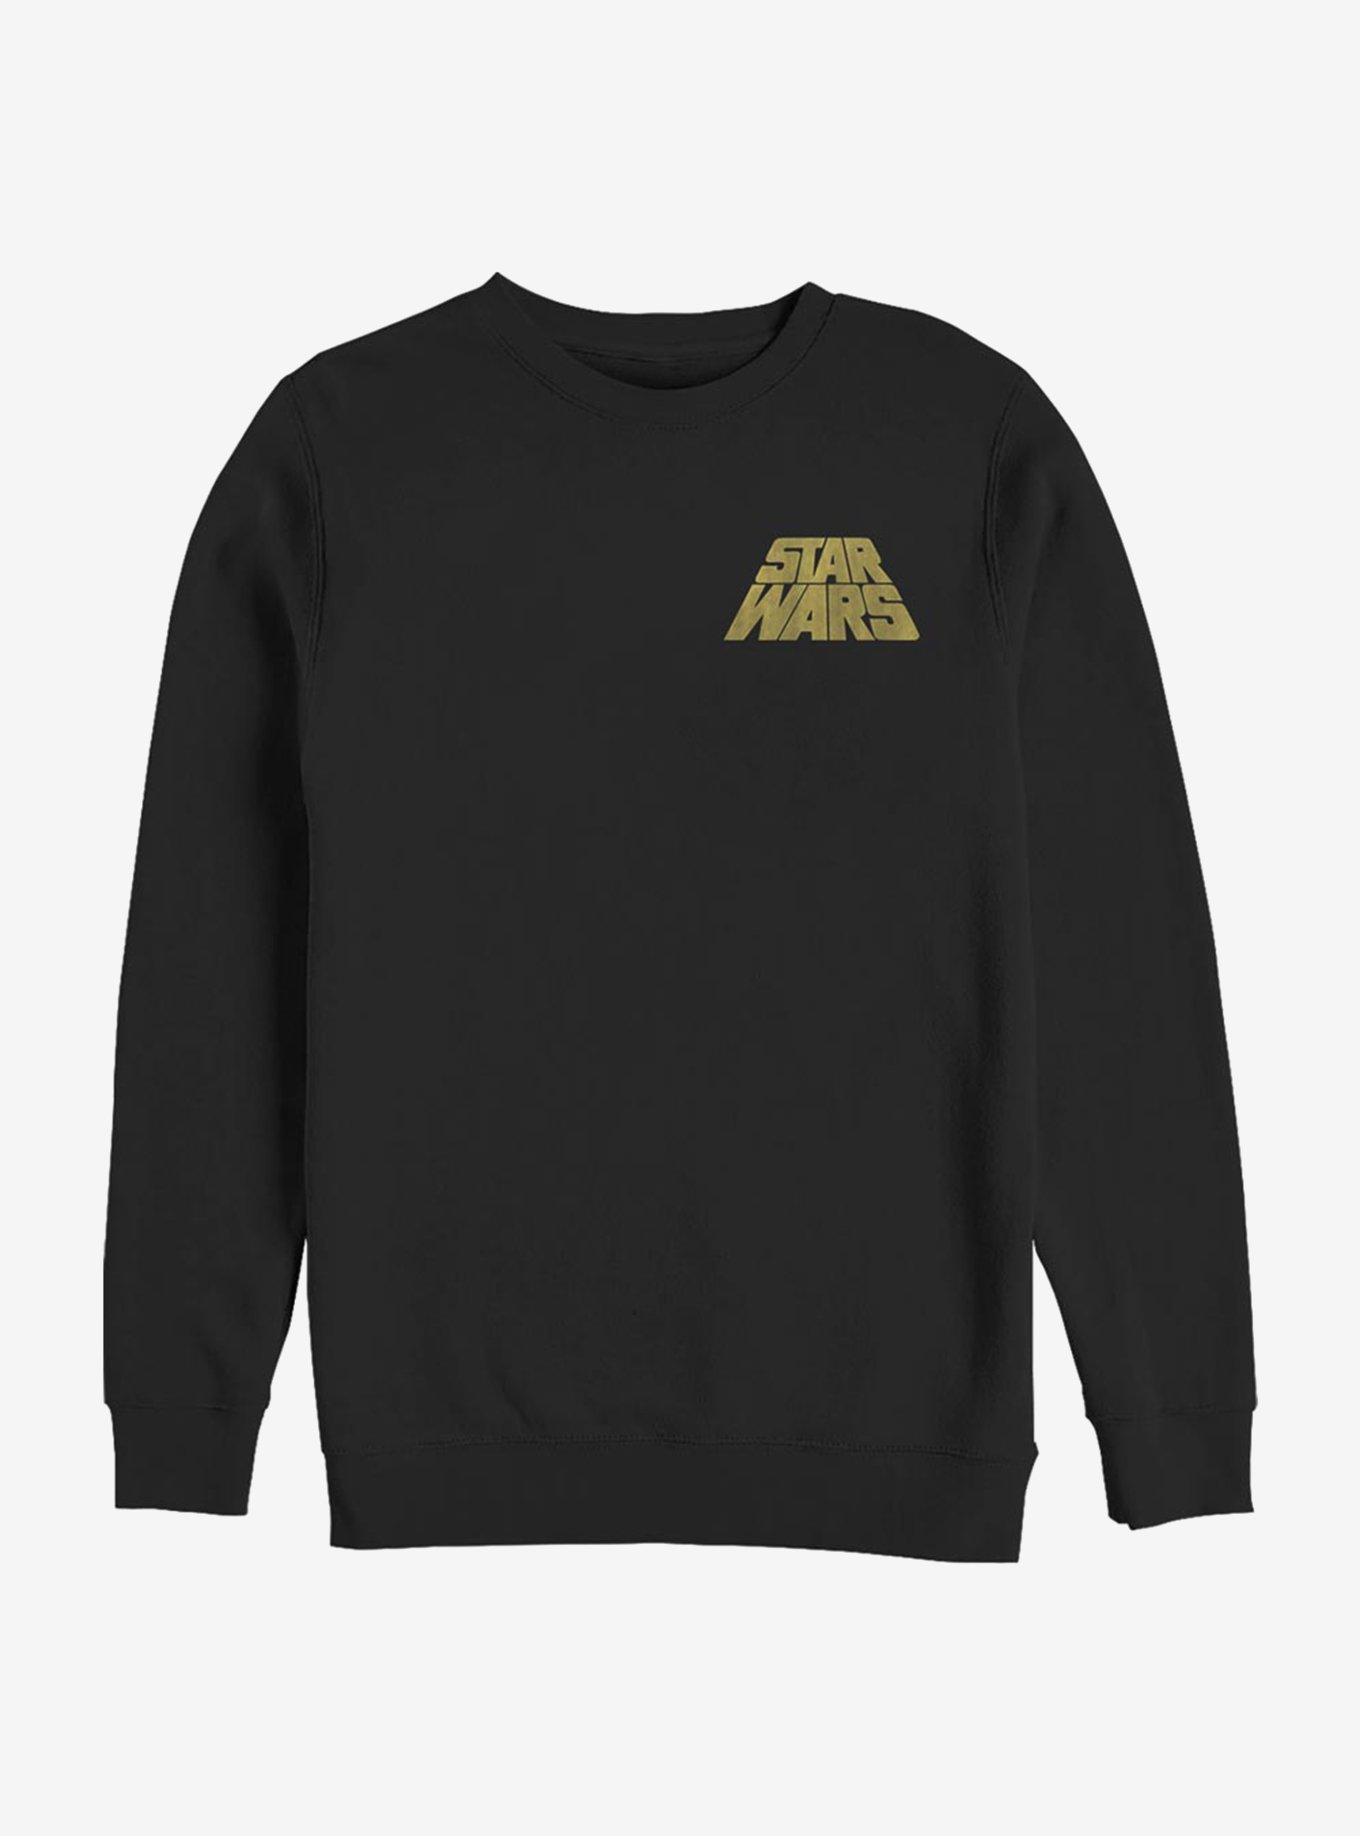 Star Wars Distressed Slant Logo Crew Sweatshirt, BLACK, hi-res